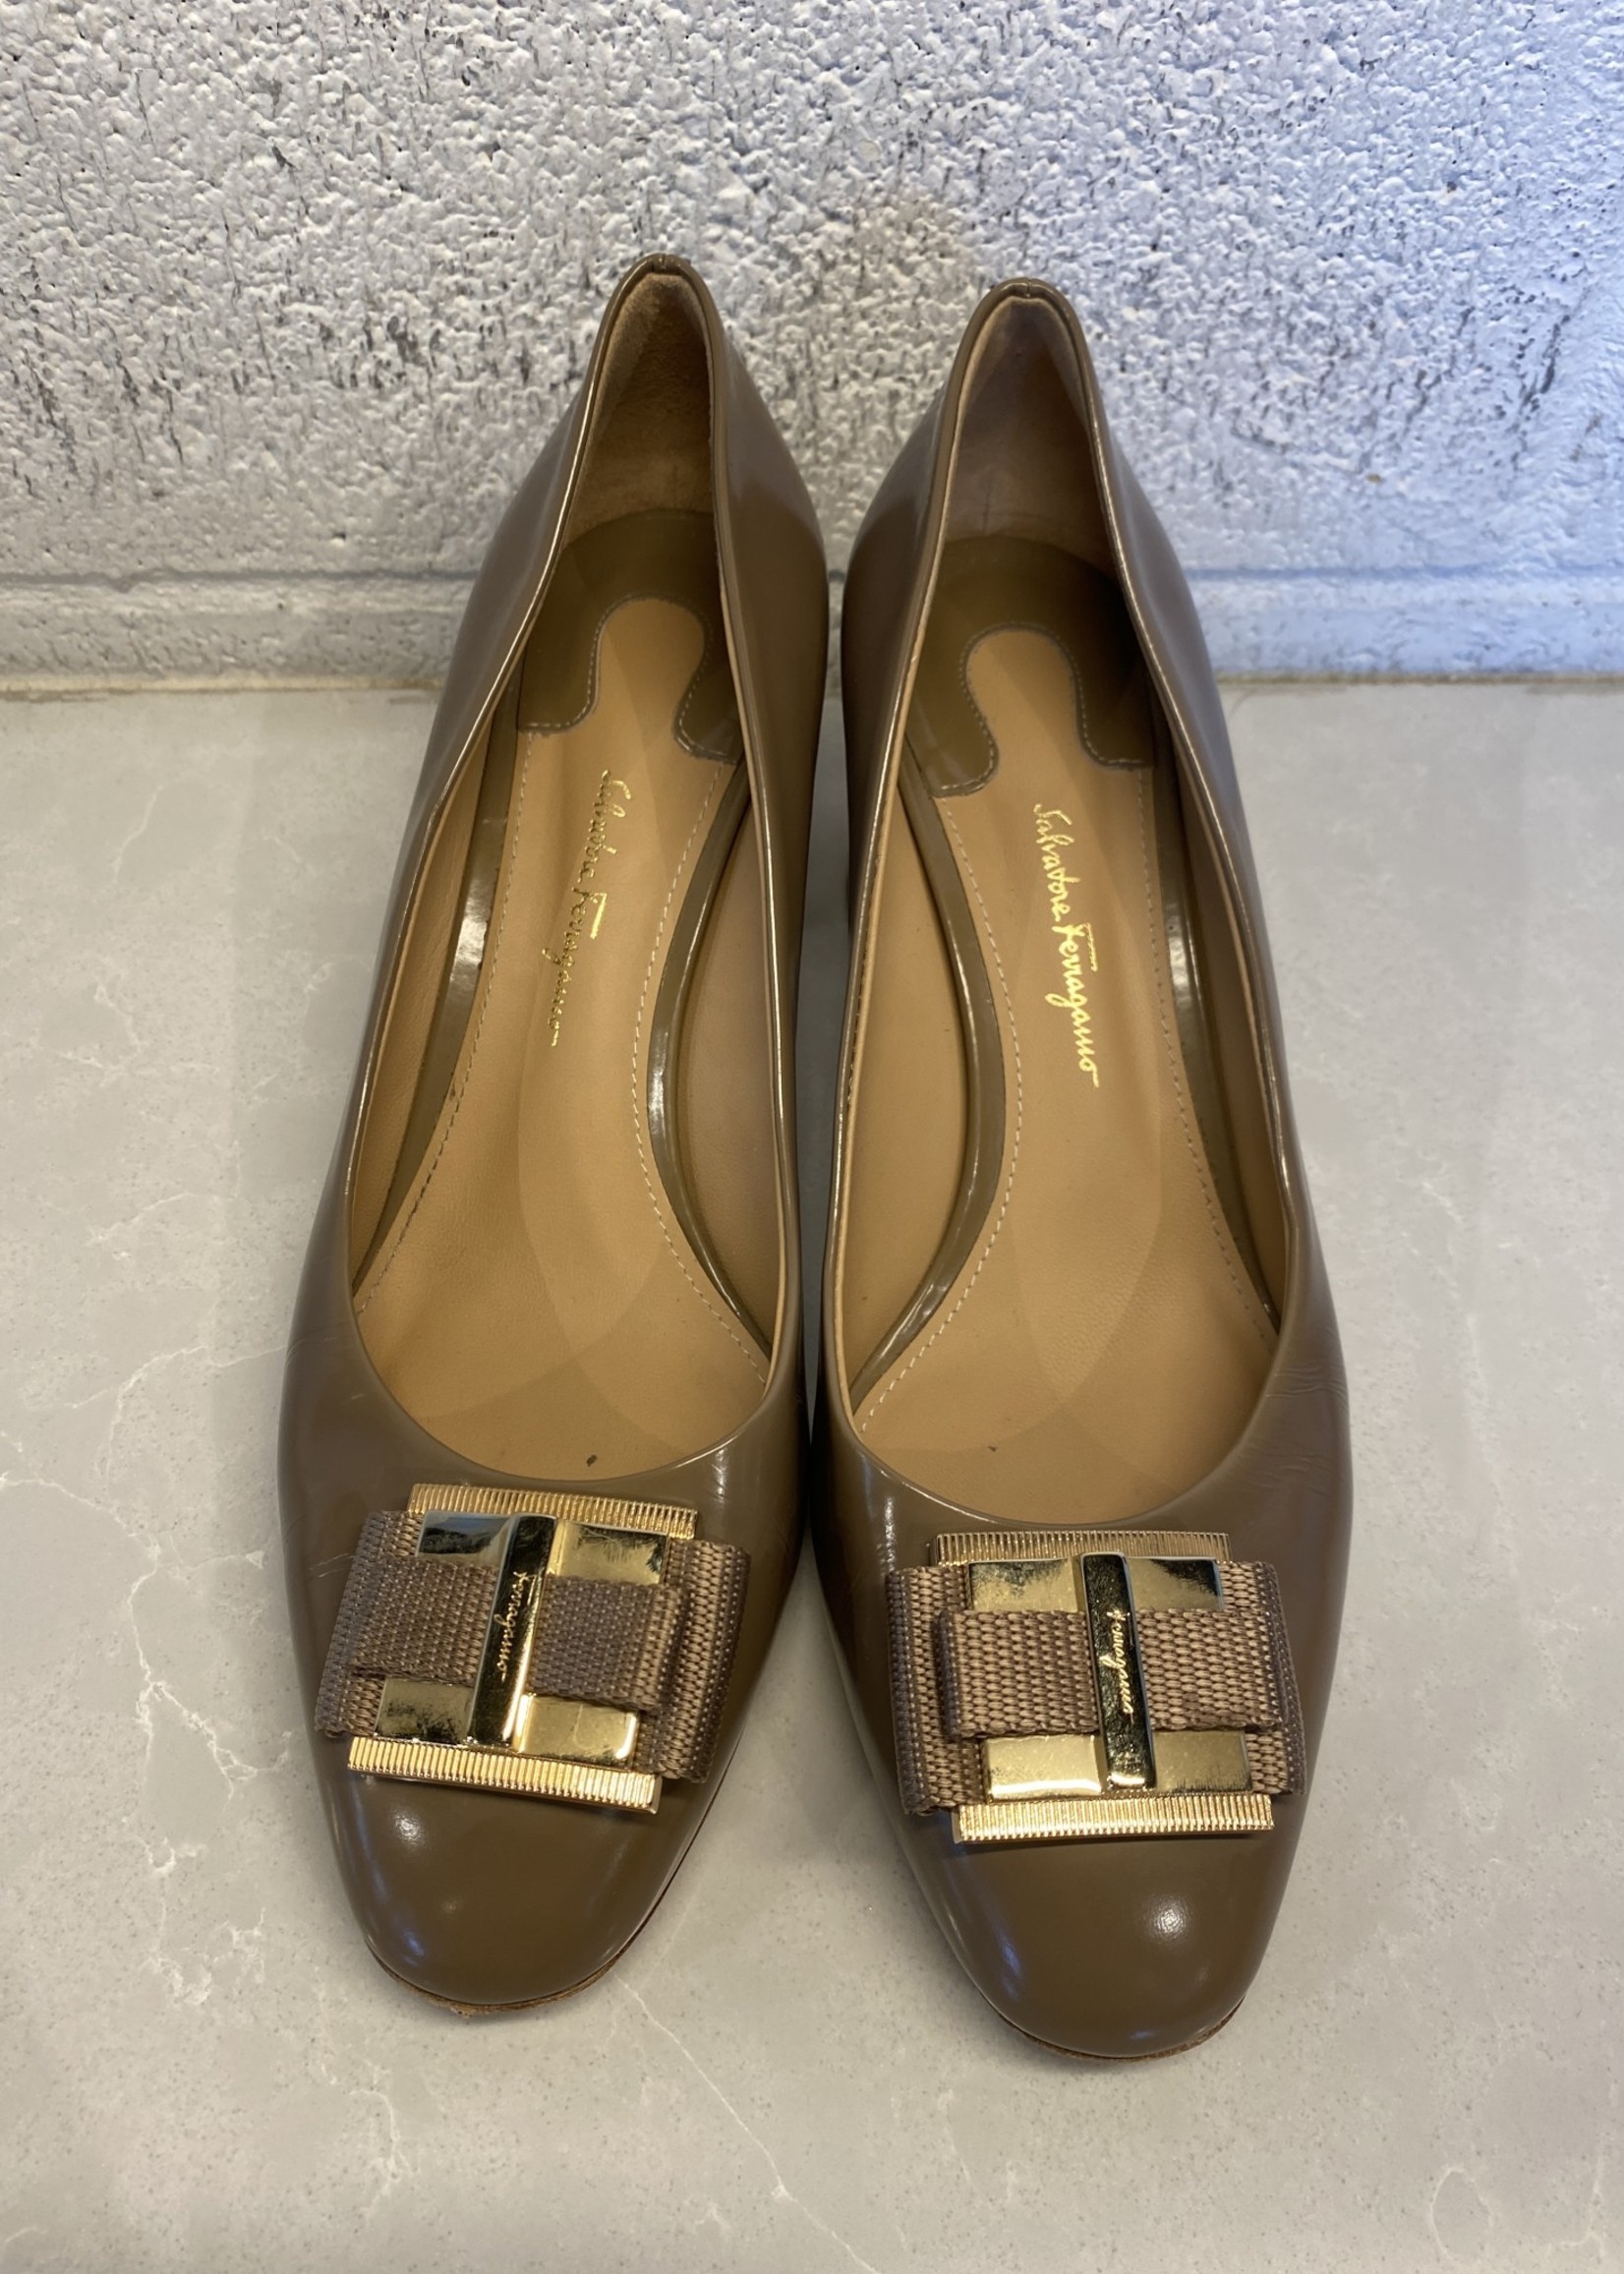 Salvatore Ferragamo Patent Leather Heels 8.5